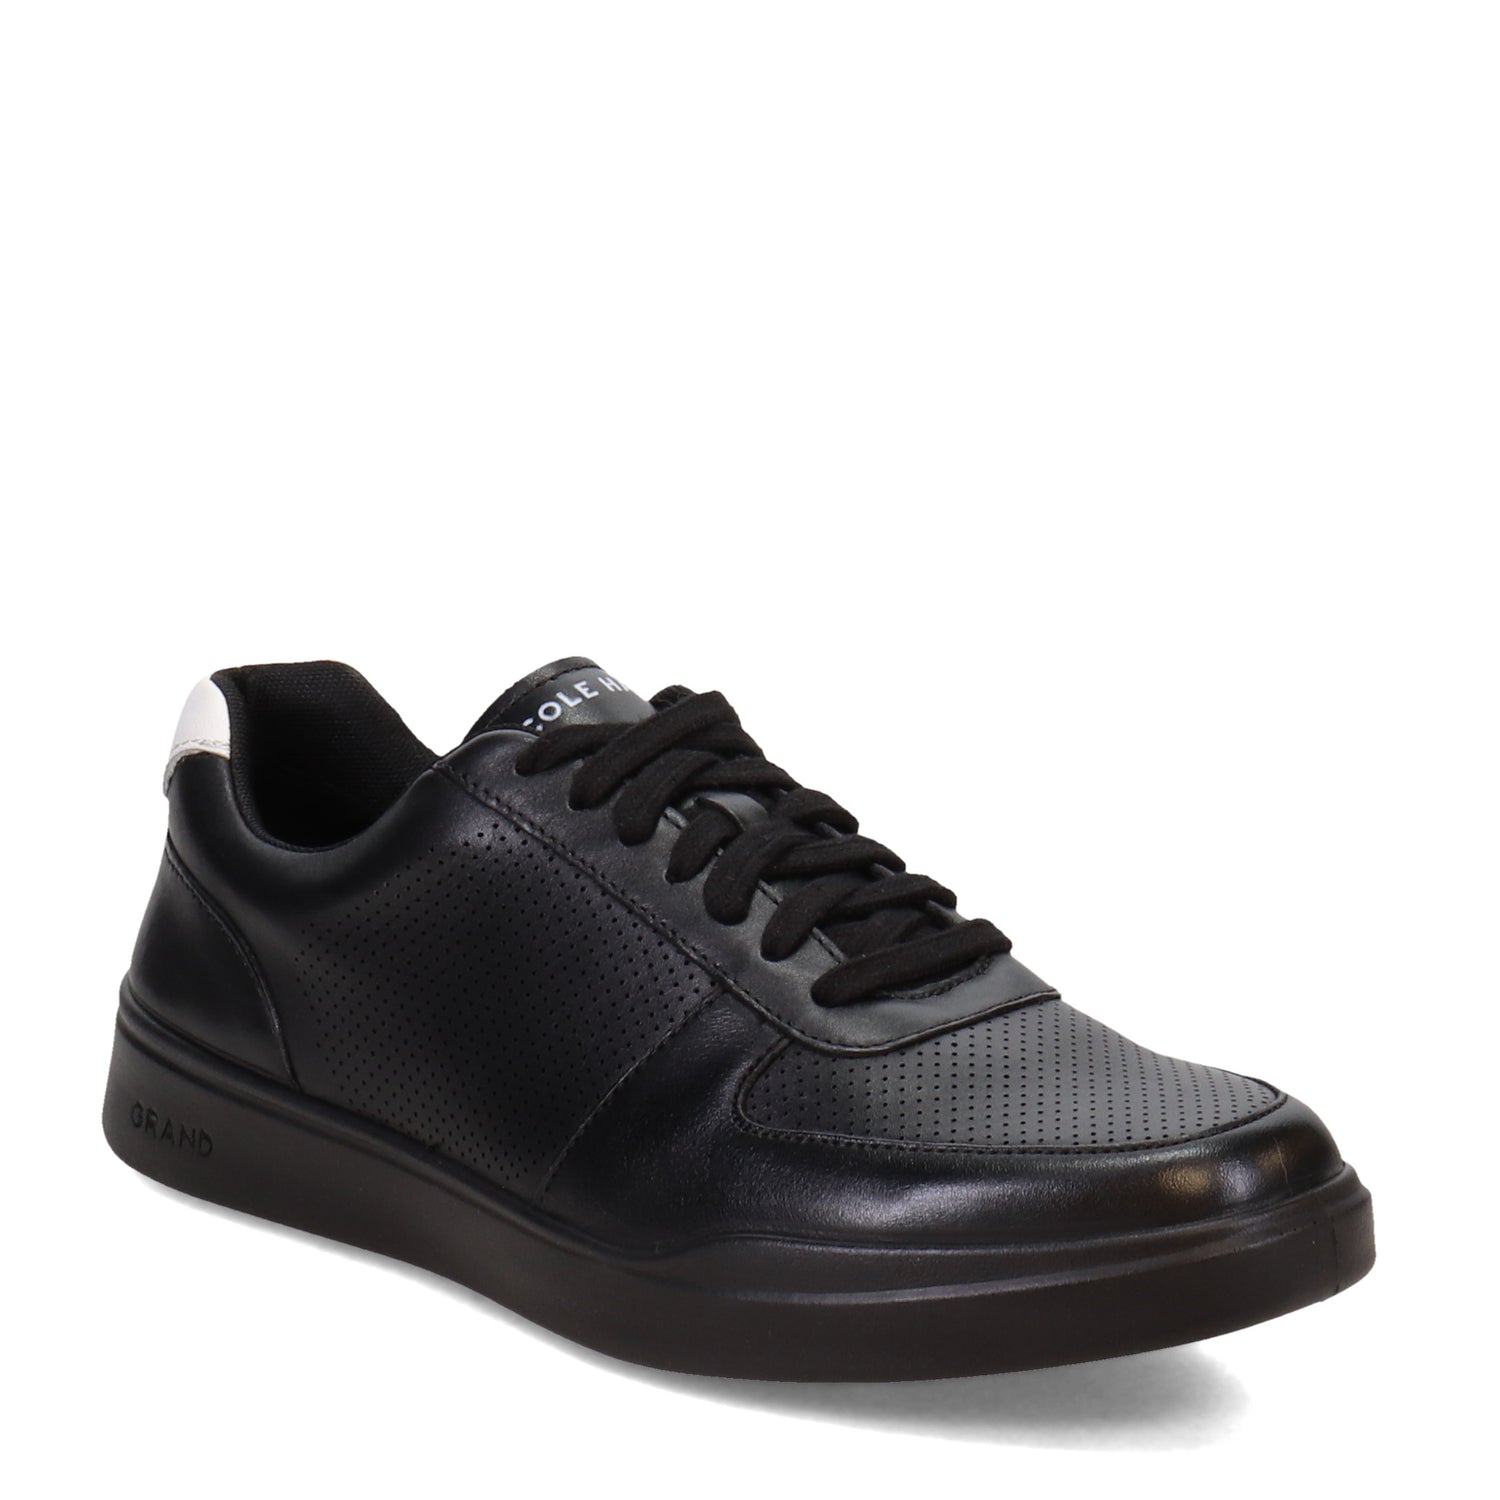 Peltz Shoes  Men's Cole Haan Grand Crosscourt Modern Perf Sneaker BLACK-BLK C33989